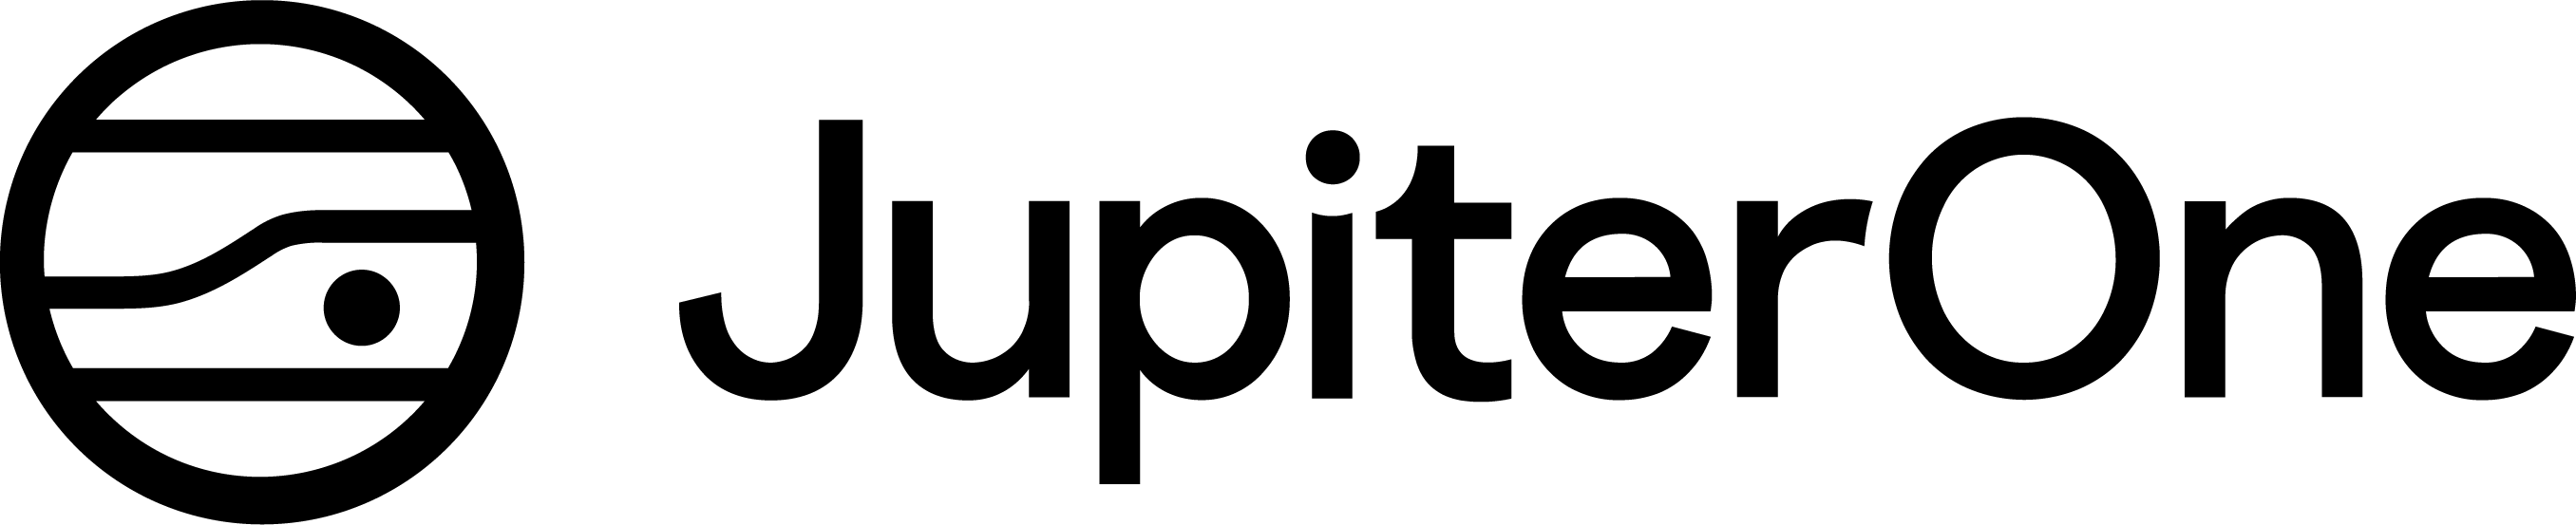 JupiterOne Logo Black